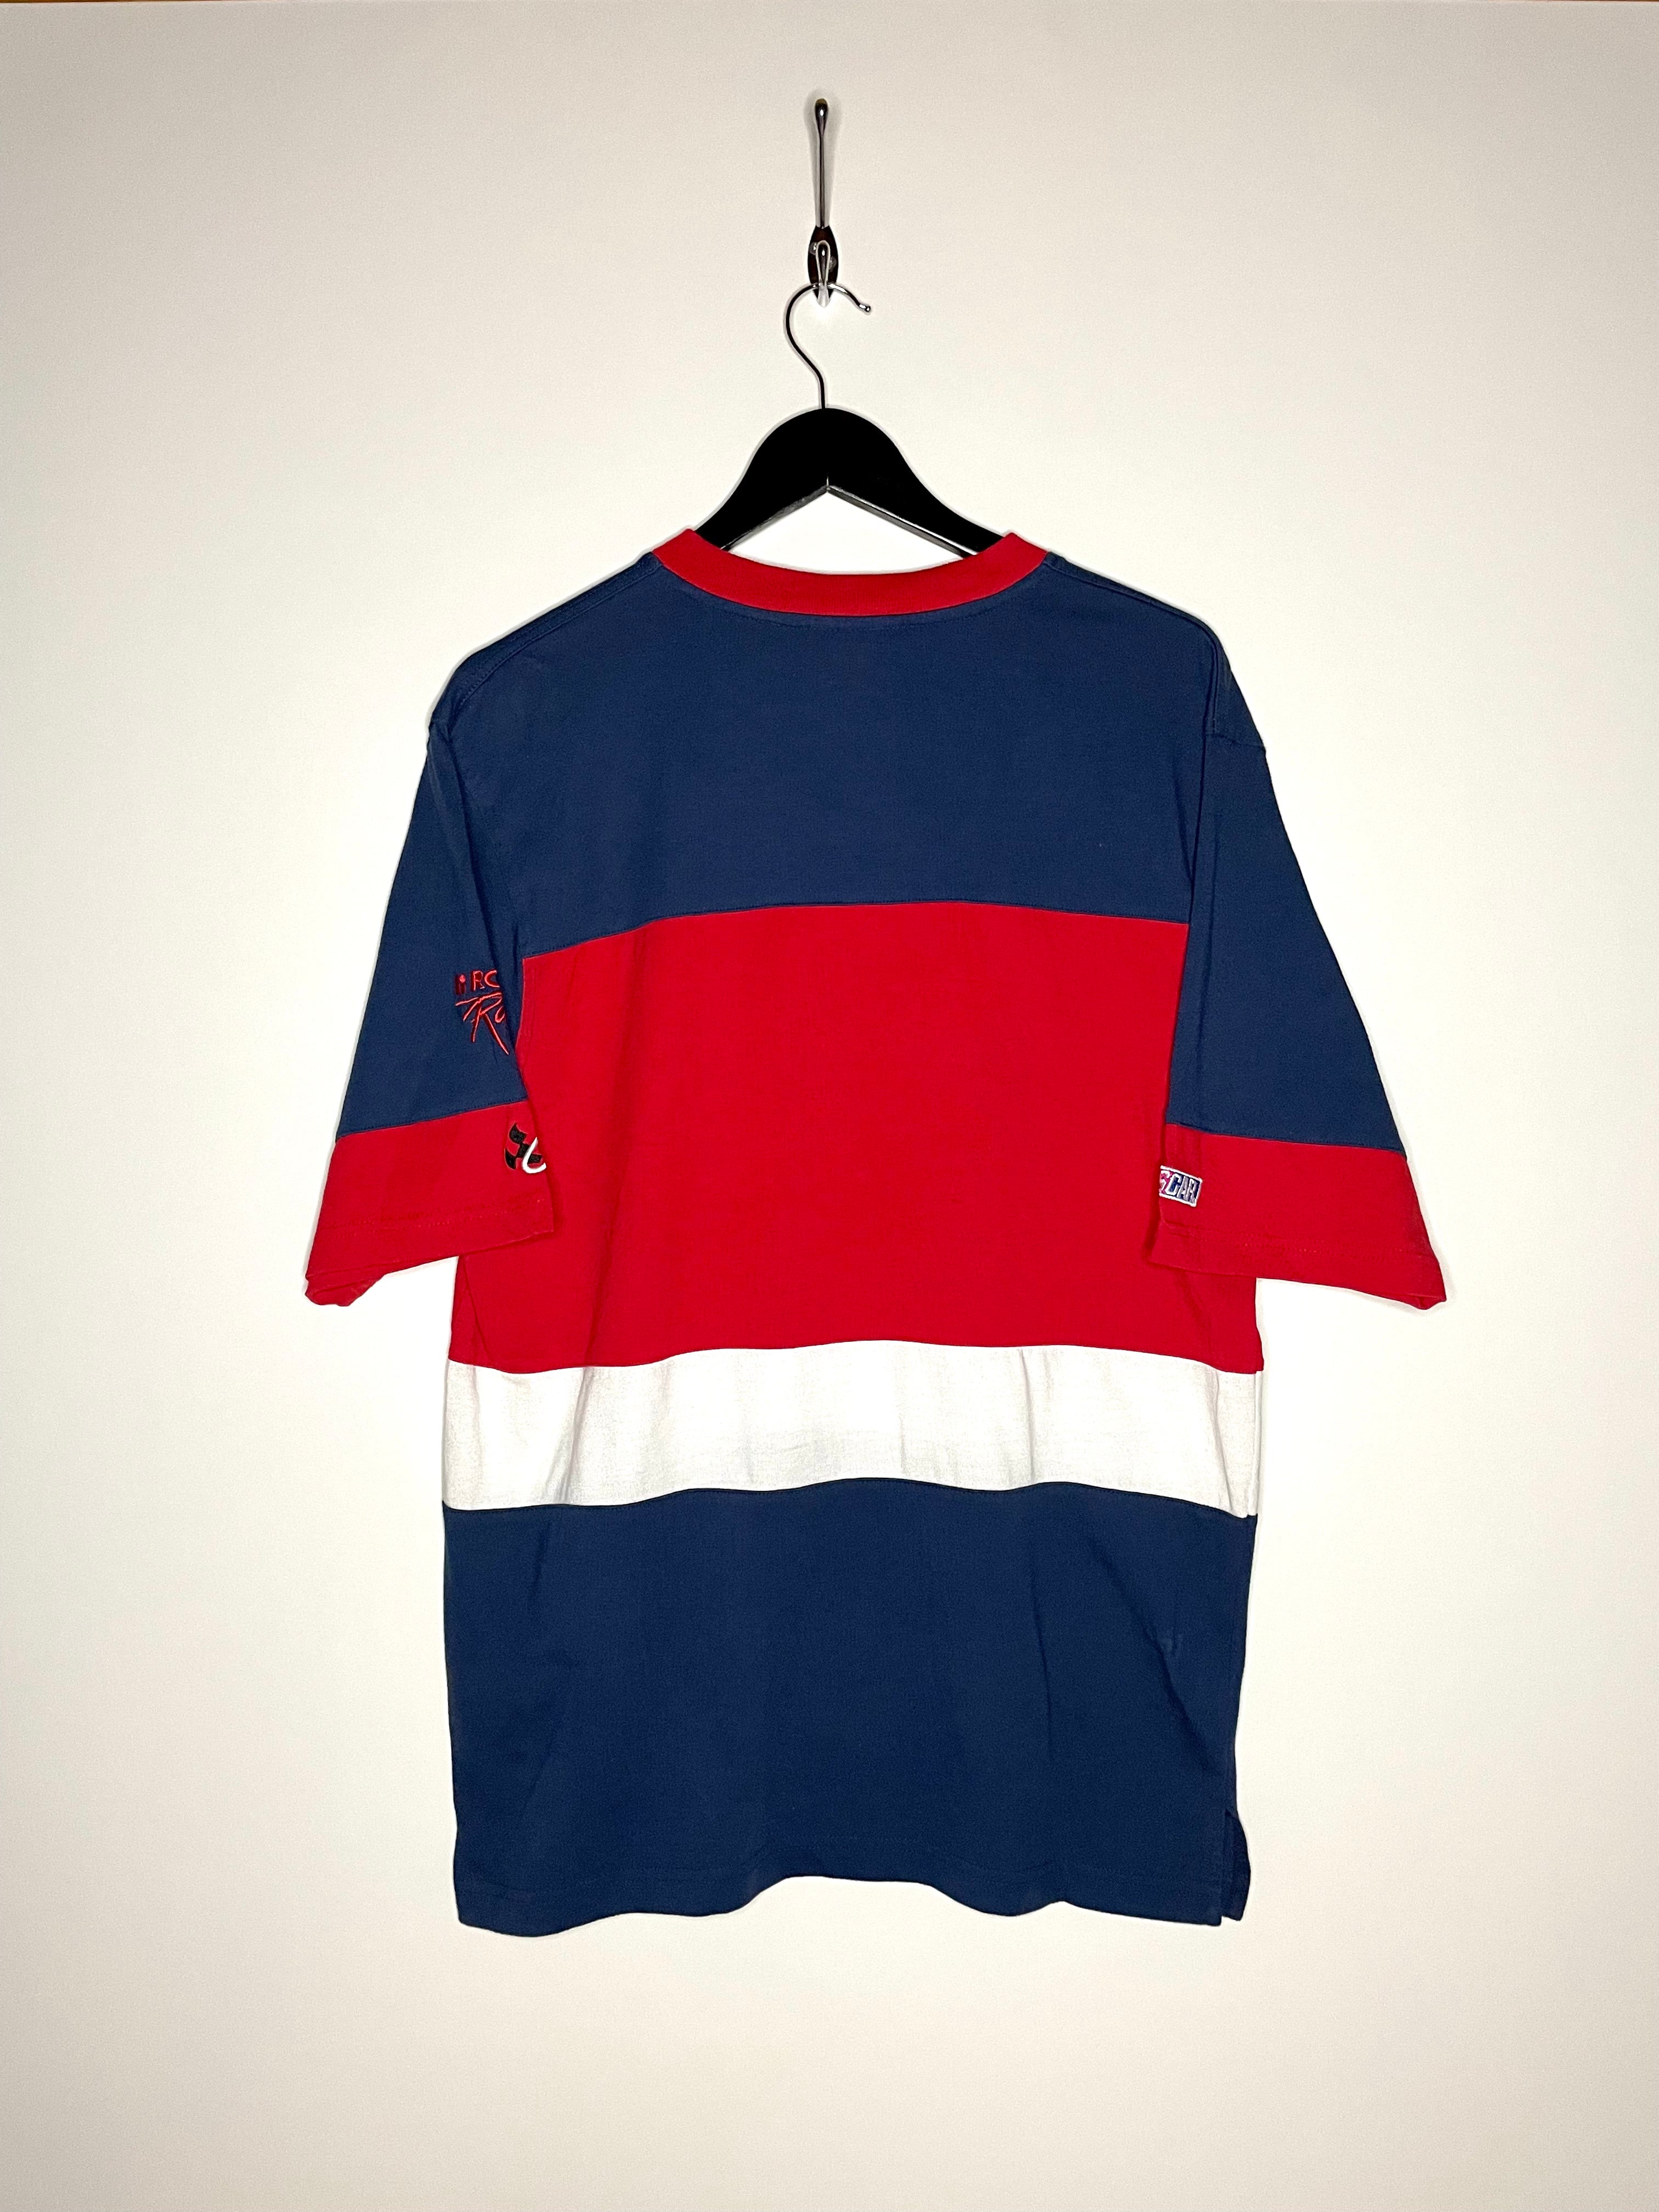 Chase Authentics T-Shirt Nescar Blue/Red Size M 